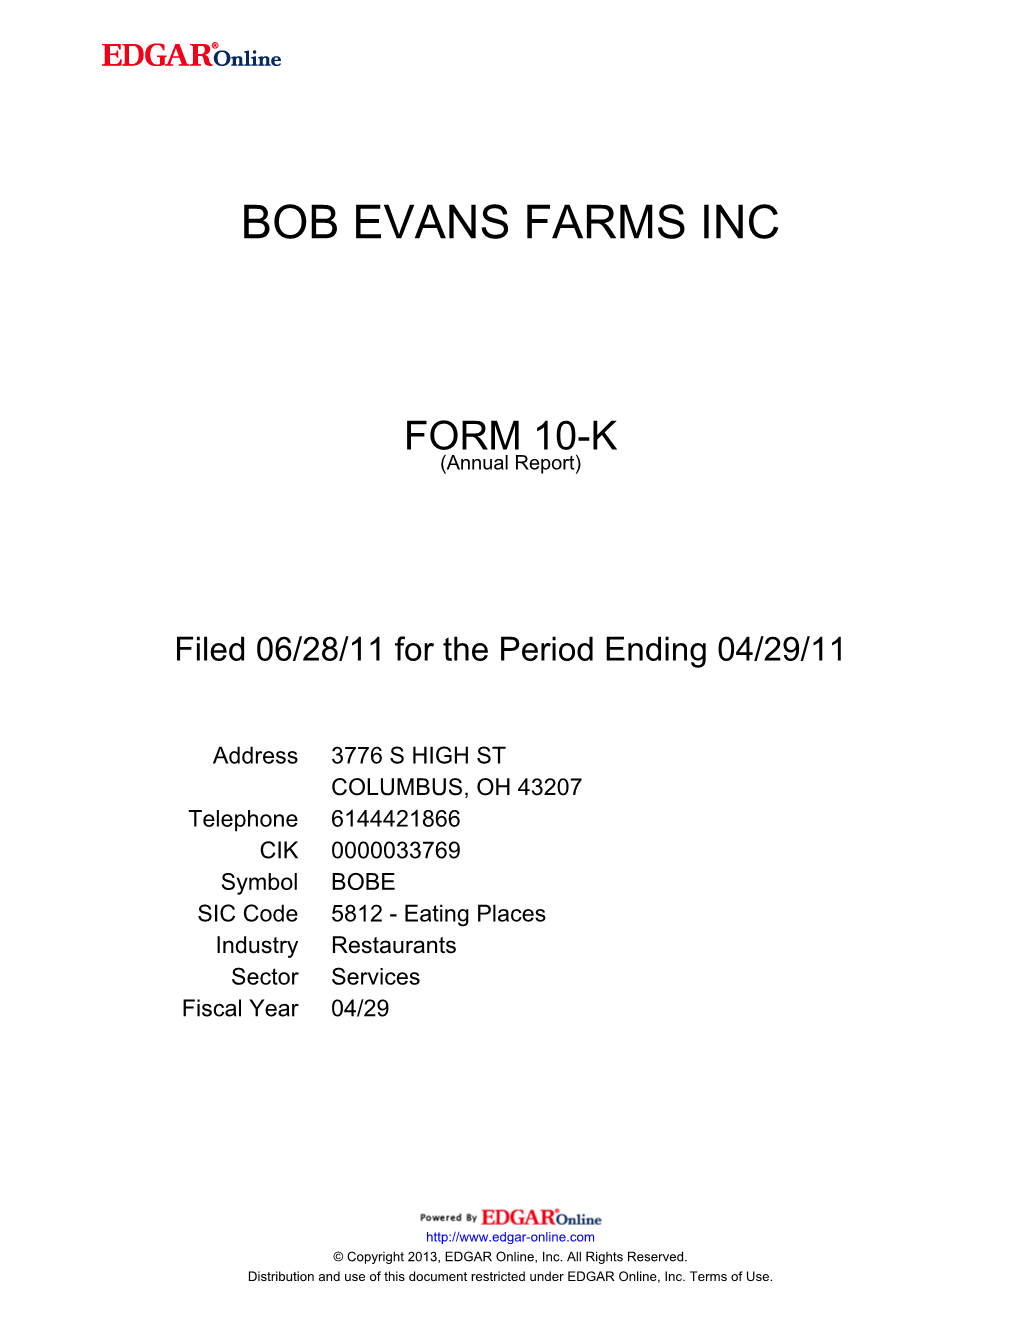 Bob Evans Farms Inc